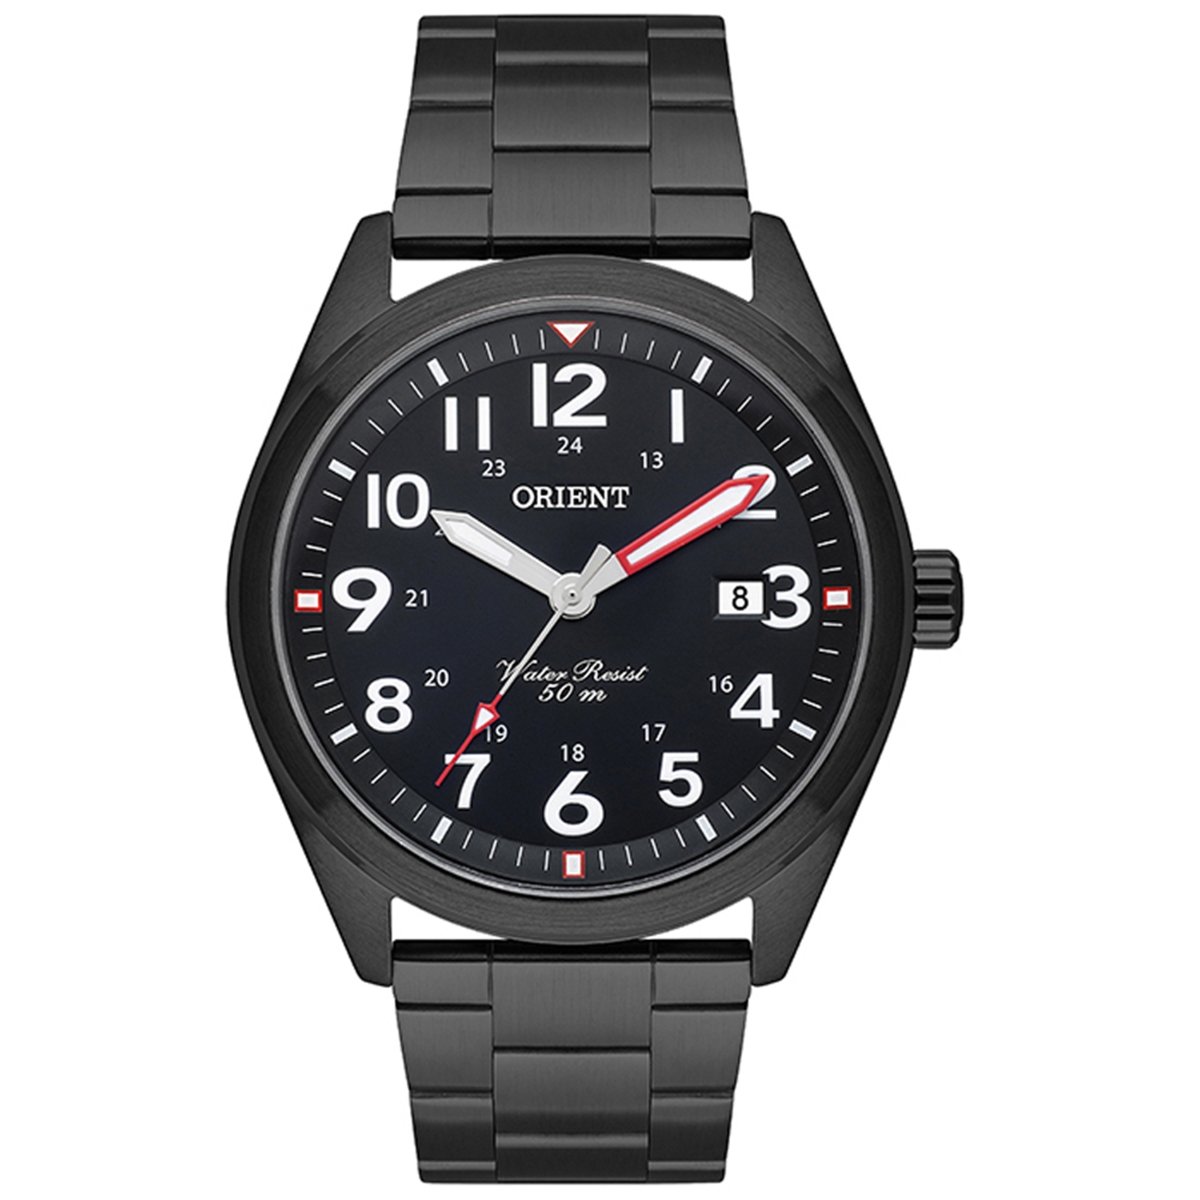 Relógio Orient Eternal Masculino - MPSS1036 P2PX Preto 1